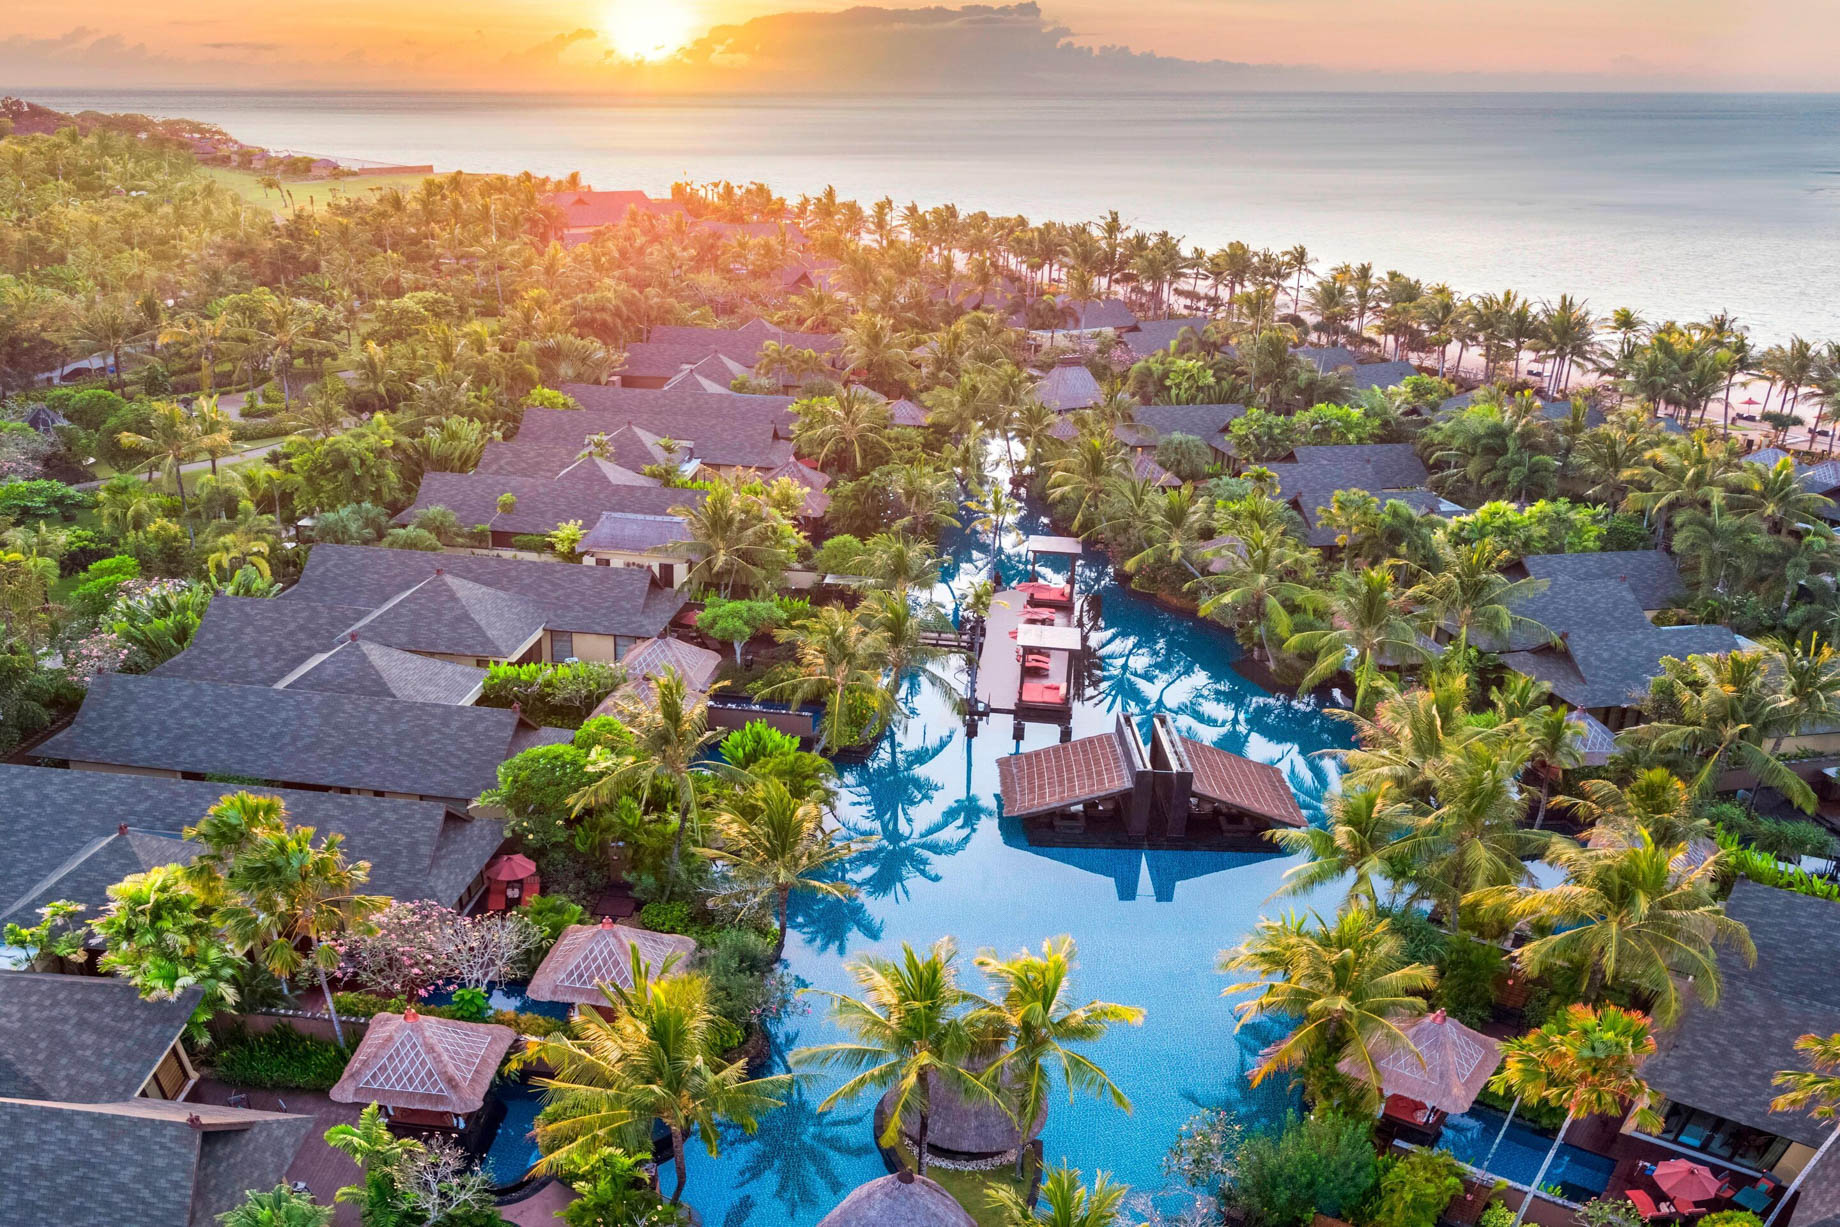 The St. Regis Bali Luxury Resort - Bali, Indonesia